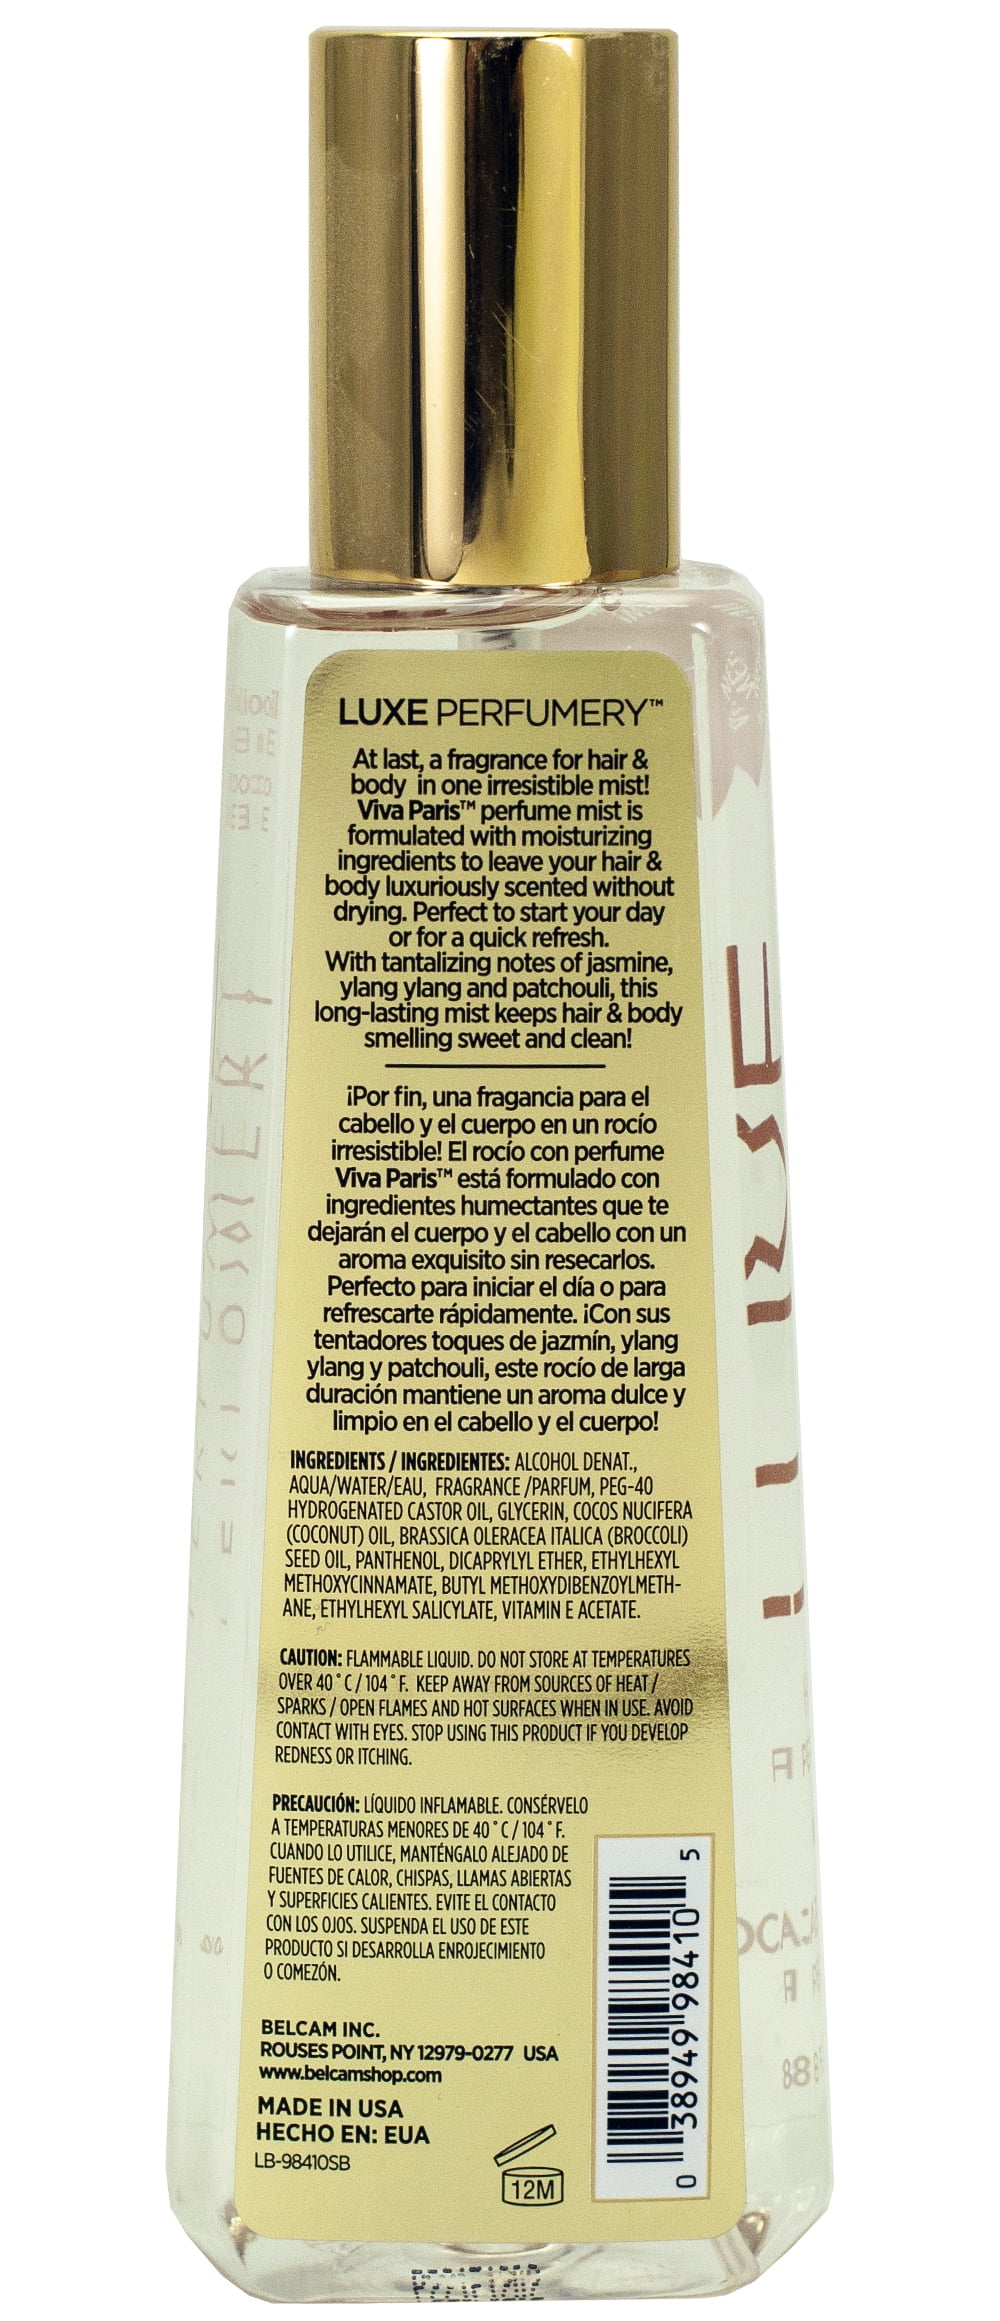 Luxe Perfumery Hair & Body Perfume Mist, Viva Paris 8.0 fl oz. 